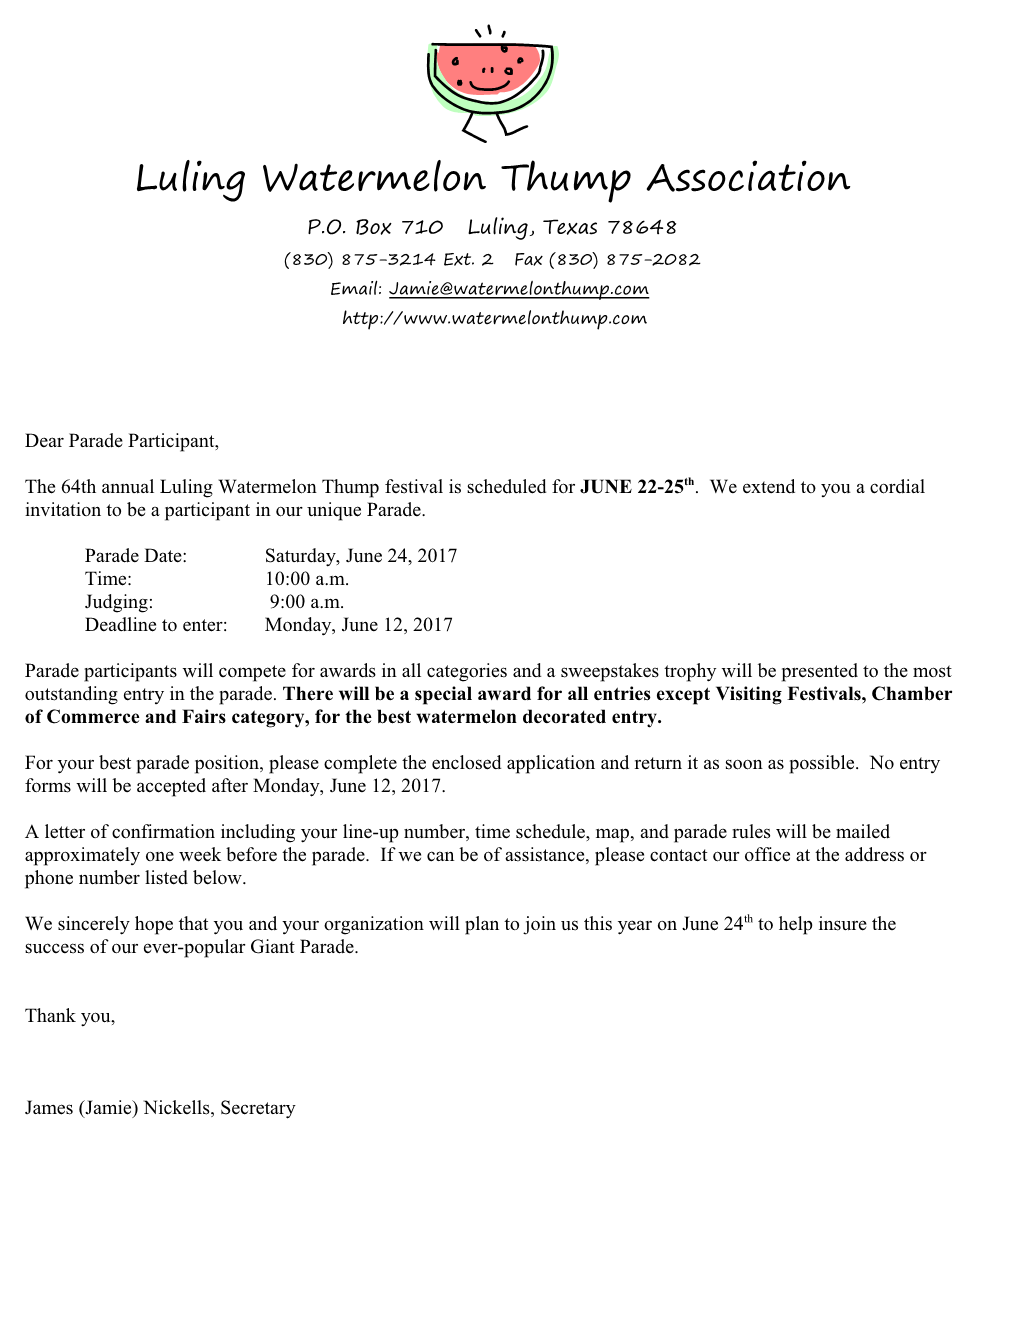 Luling Watermelon Thump Association